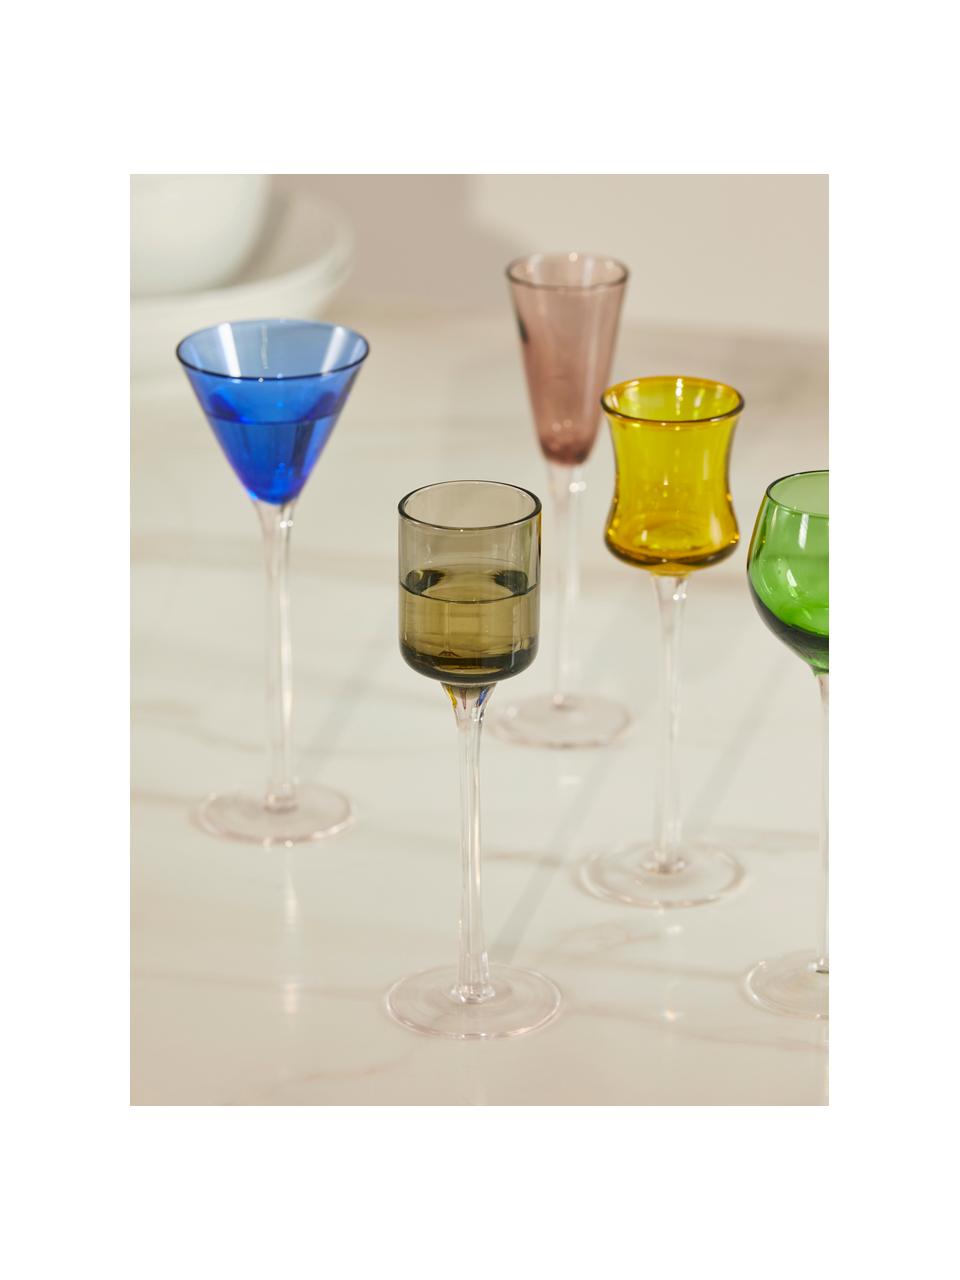 Set 6 bicchierini in vetro soffiato Lyngby, Vetro, Multicolore, trasparente, Ø 5 x Alt. 16 cm, 25 - 50 ml